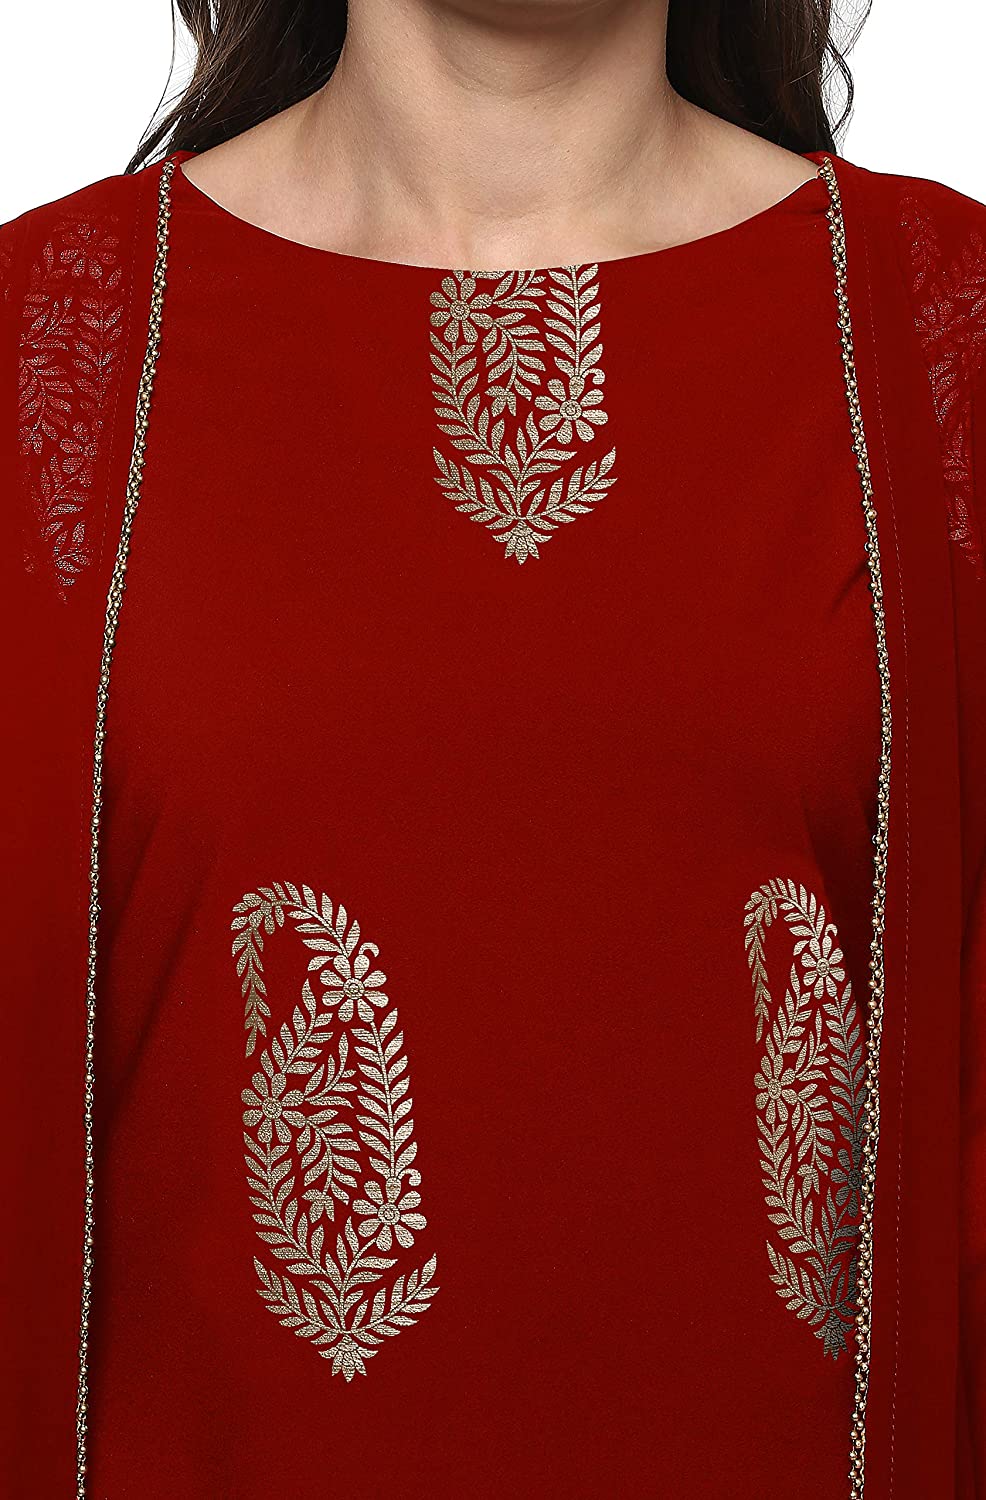 Janasya Women's Poly Crepe Jacket Style A-line Kurta -  Kurtas & Kurtis in Sri Lanka from Arcade Online Shopping - Just Rs. 6199!